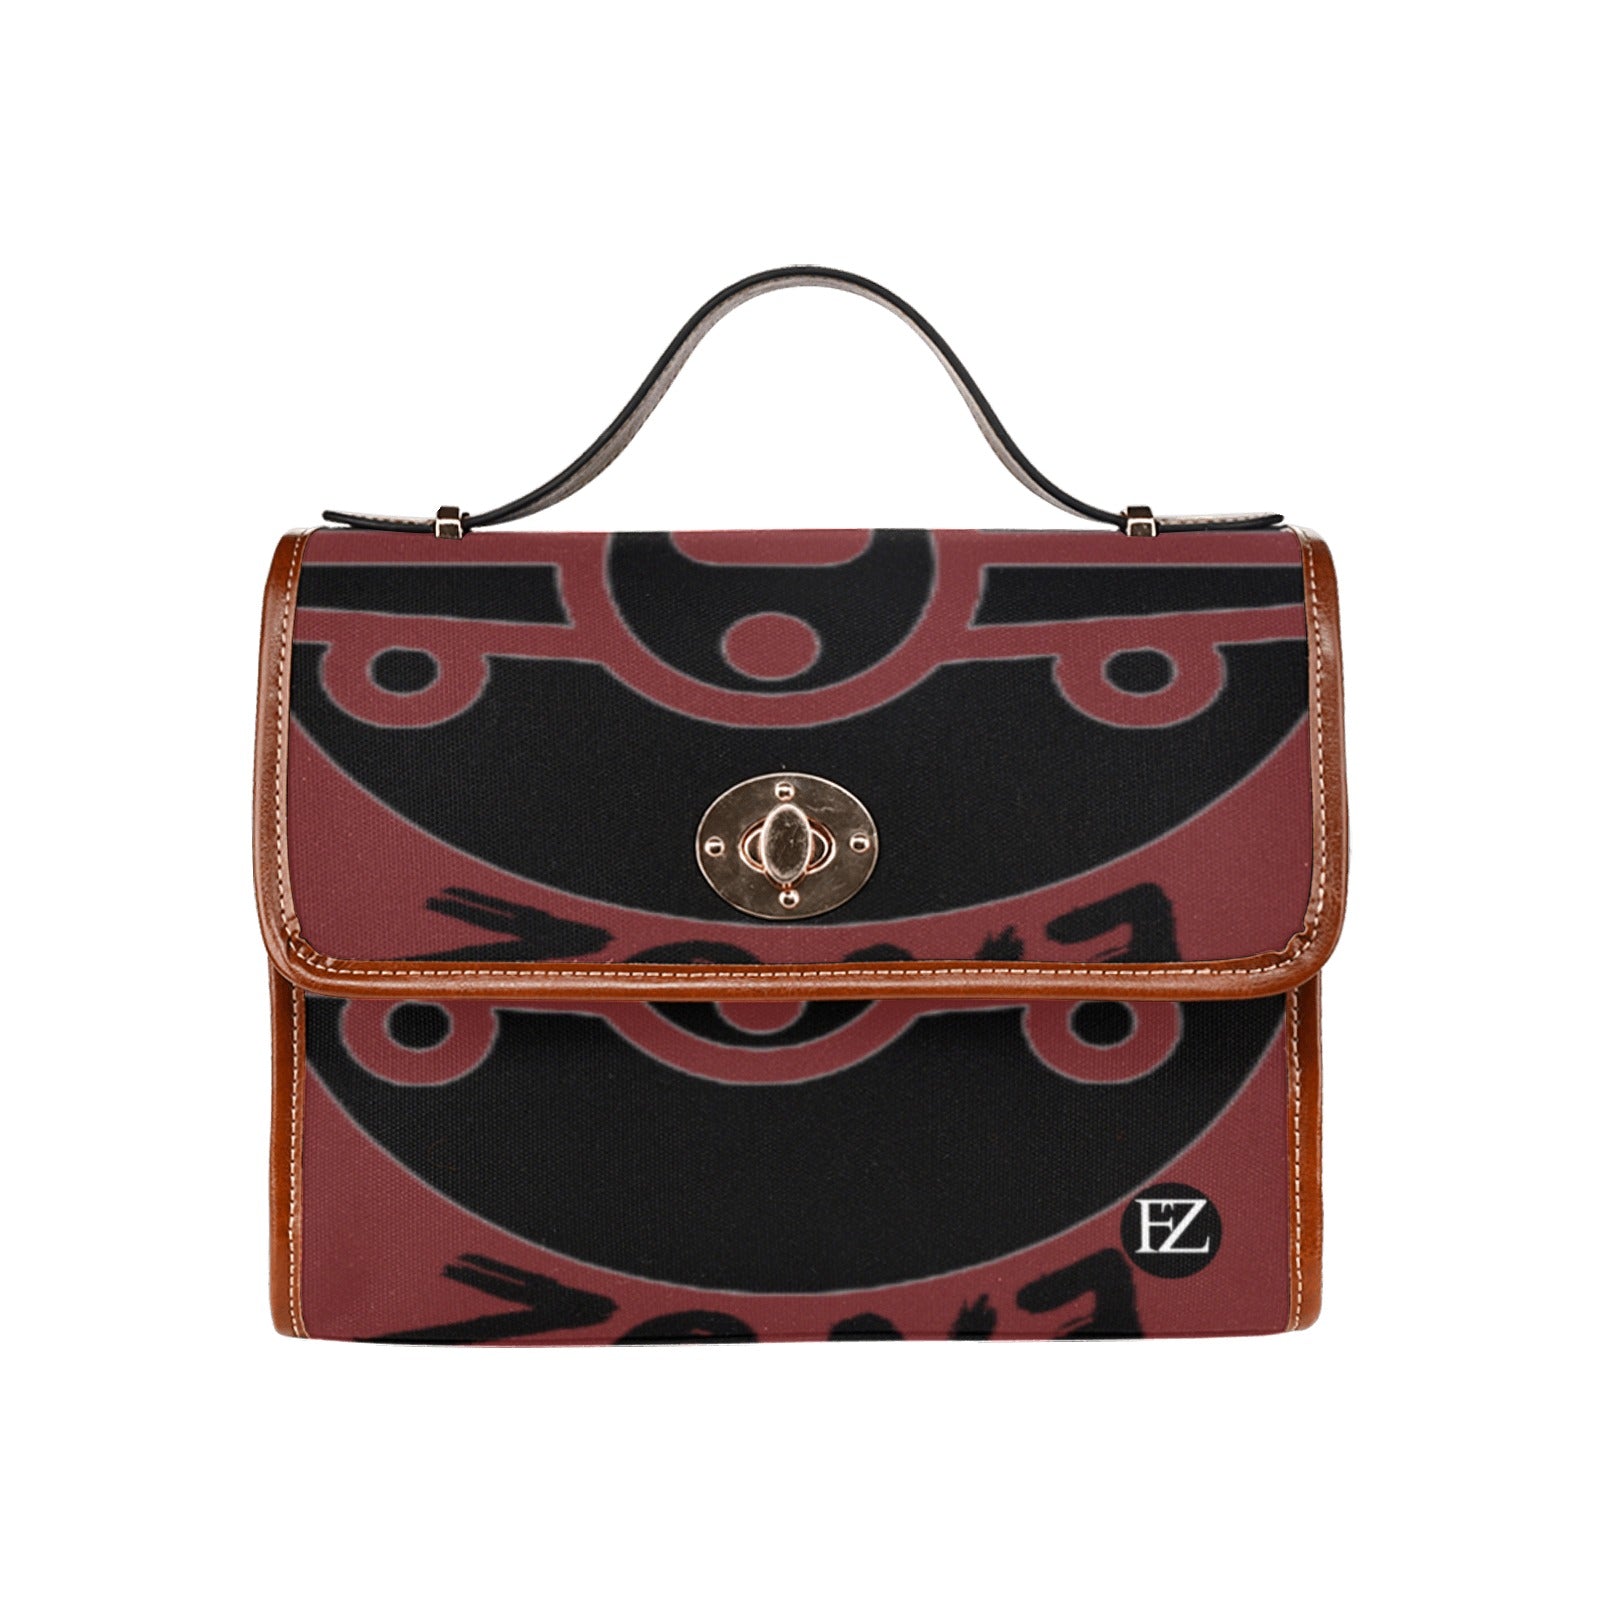 fz women's handbag - abstract one size / fz future handbag - abstract all over print waterproof canvas bag(model1641)(brown strap)